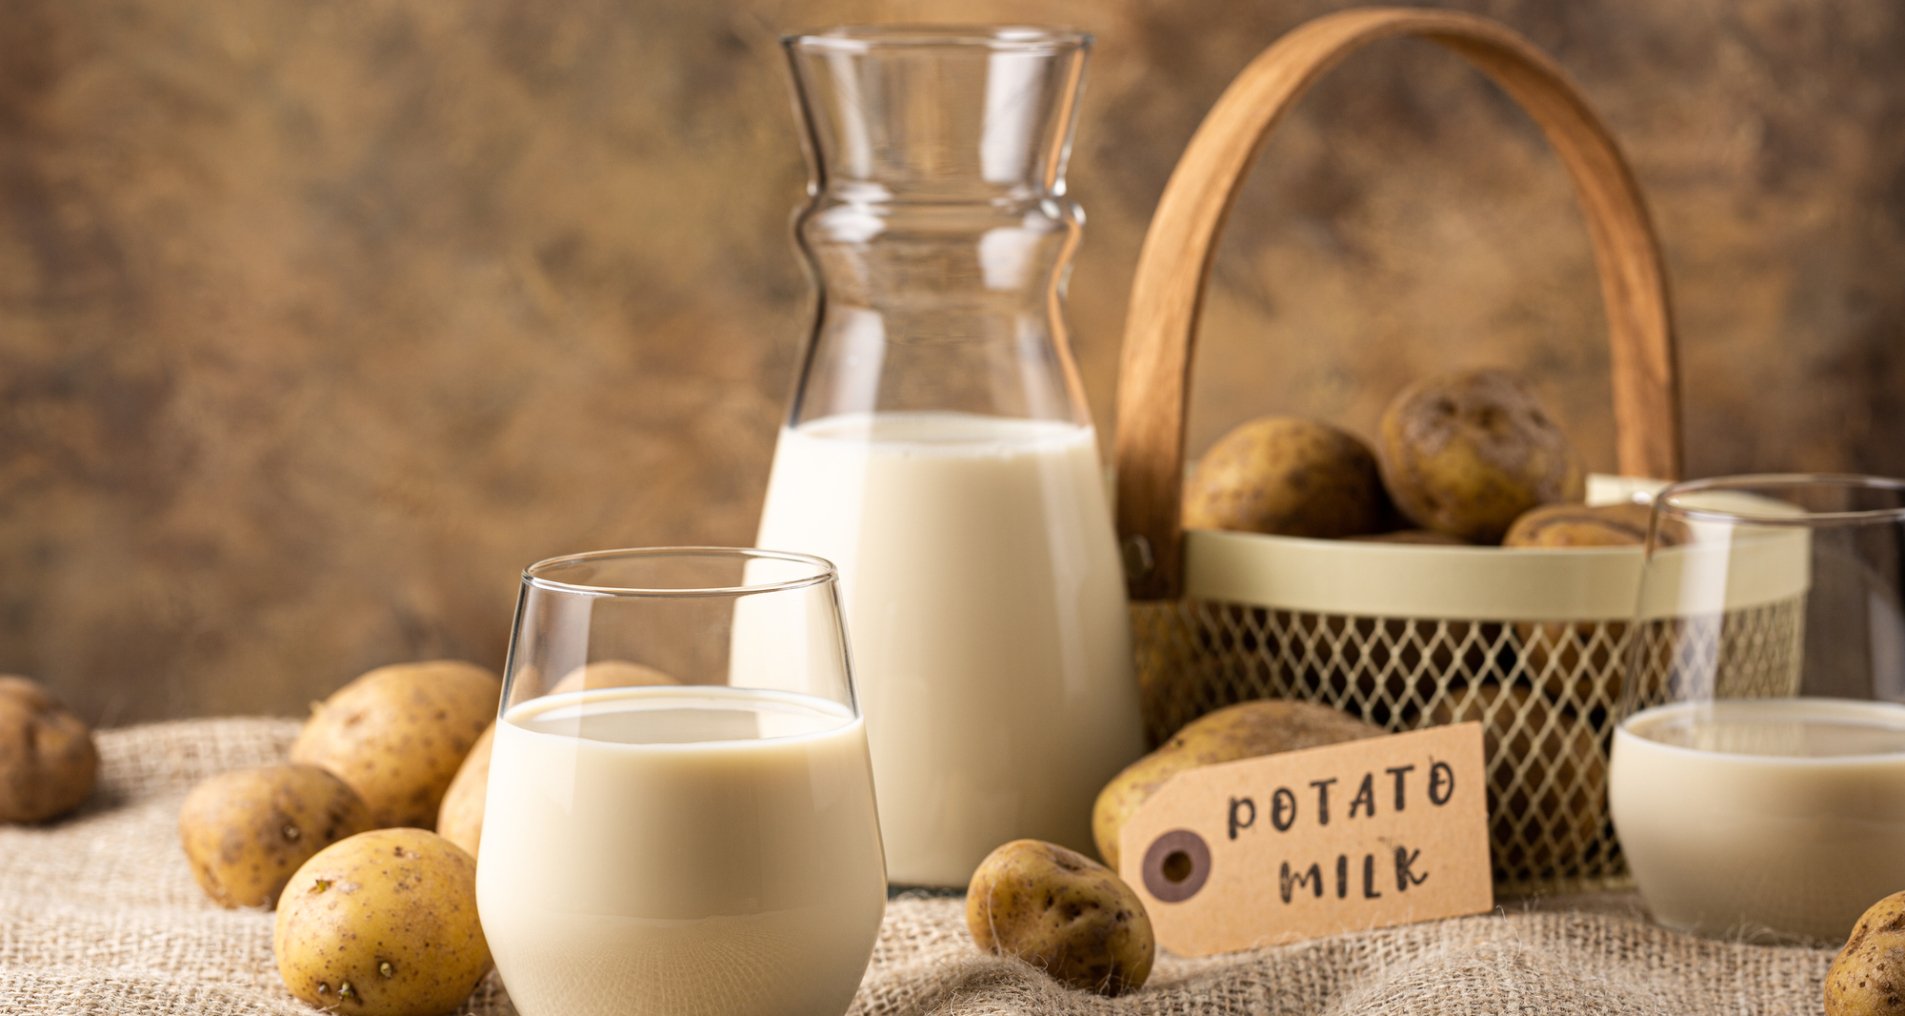 Стакан молока и бутылка на фоне корзины на скатерти рядом с картофелем